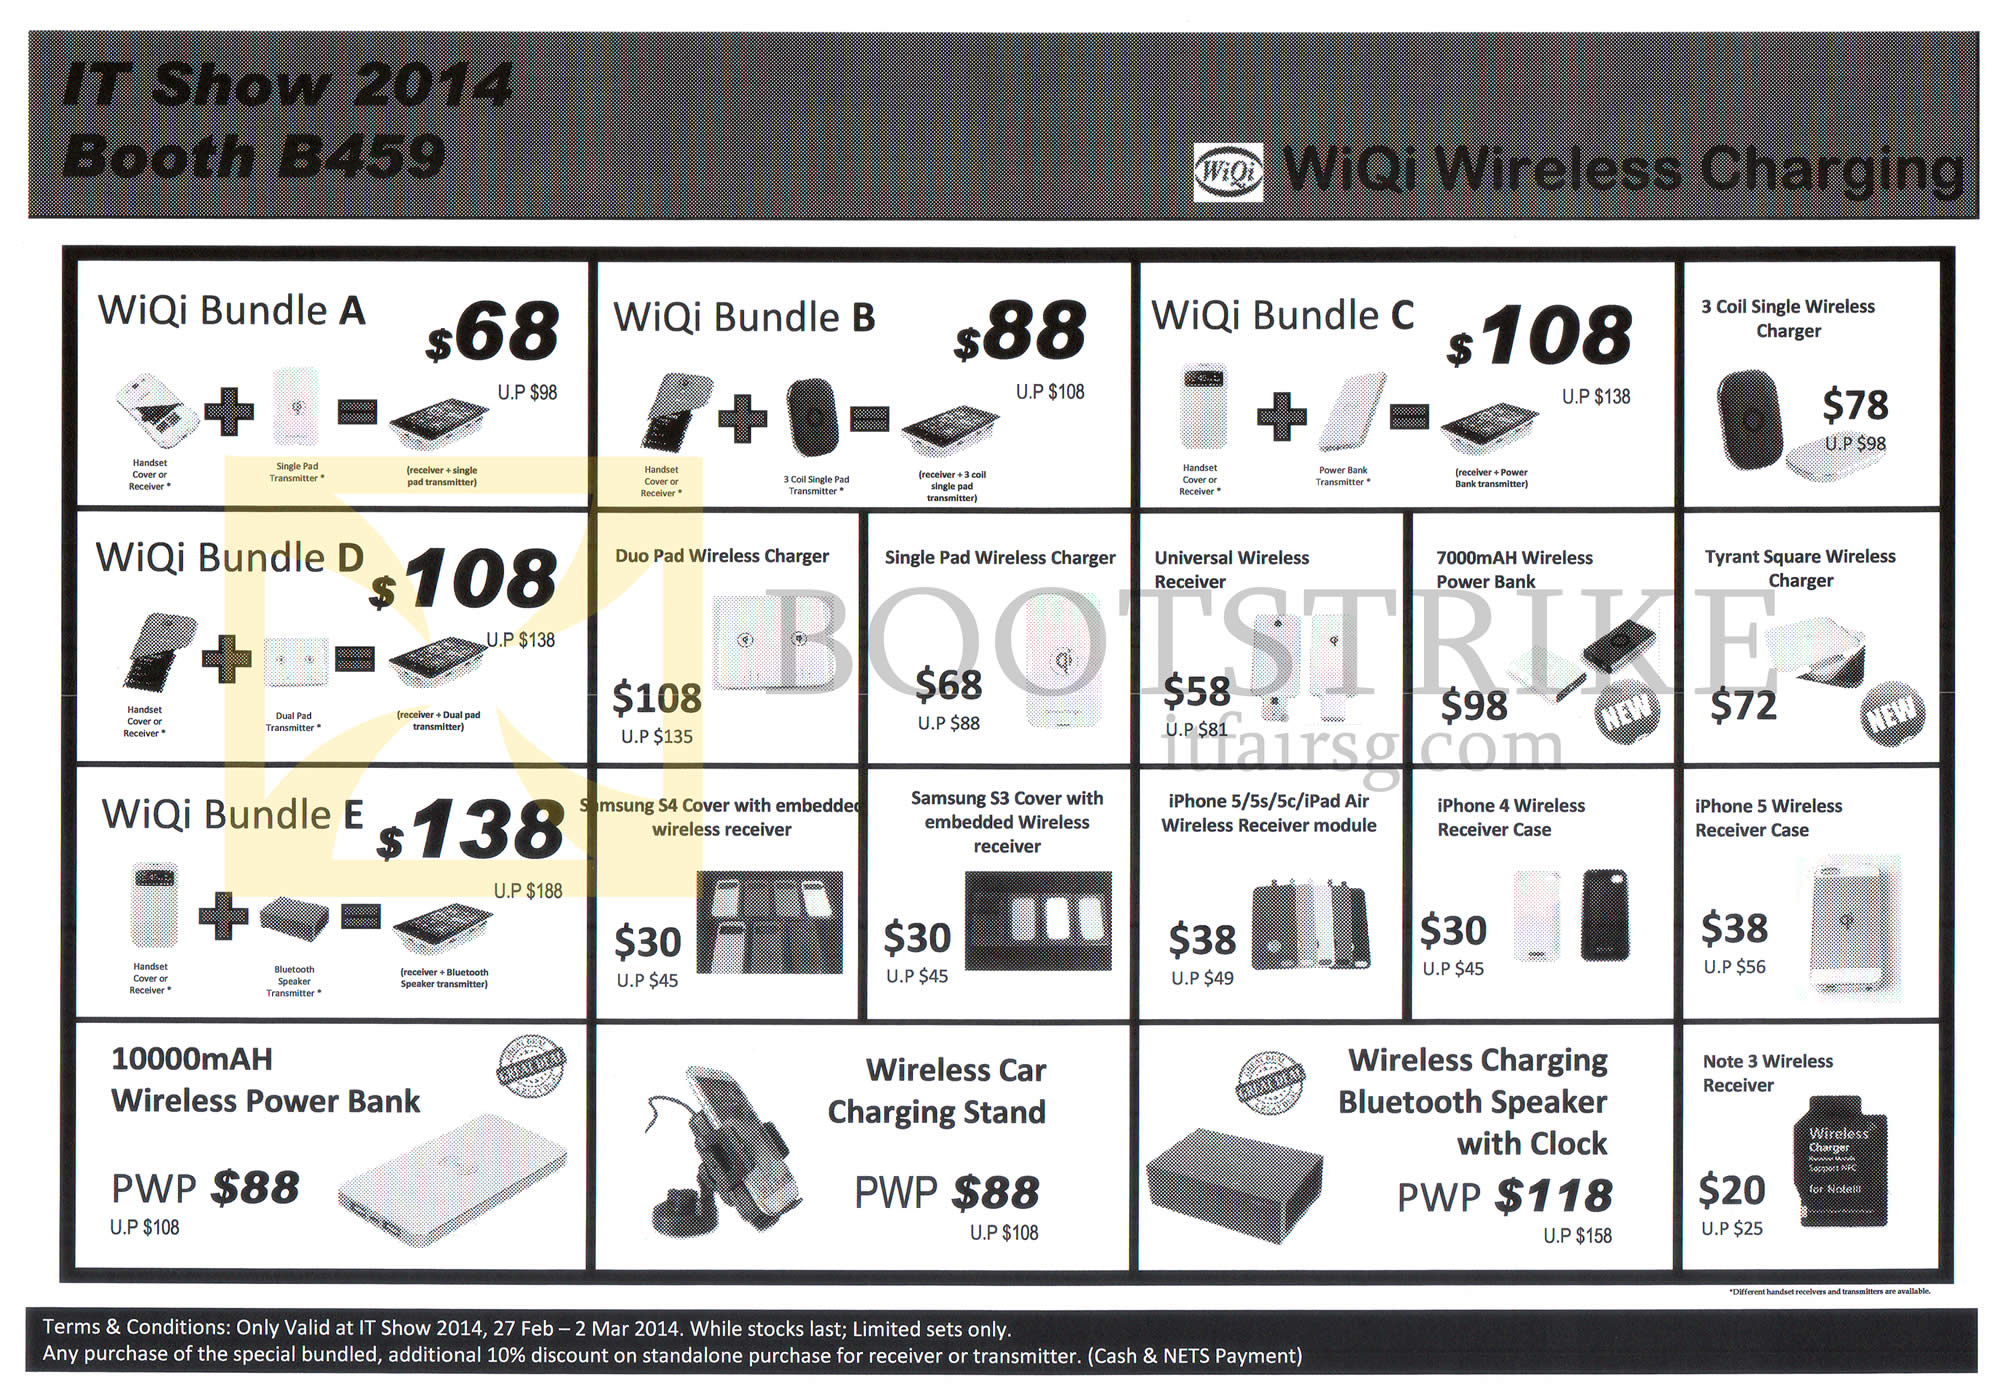 IT SHOW 2014 price list image brochure of Biolabone Wiqi Bundles, Wireless Charger, Power Bank